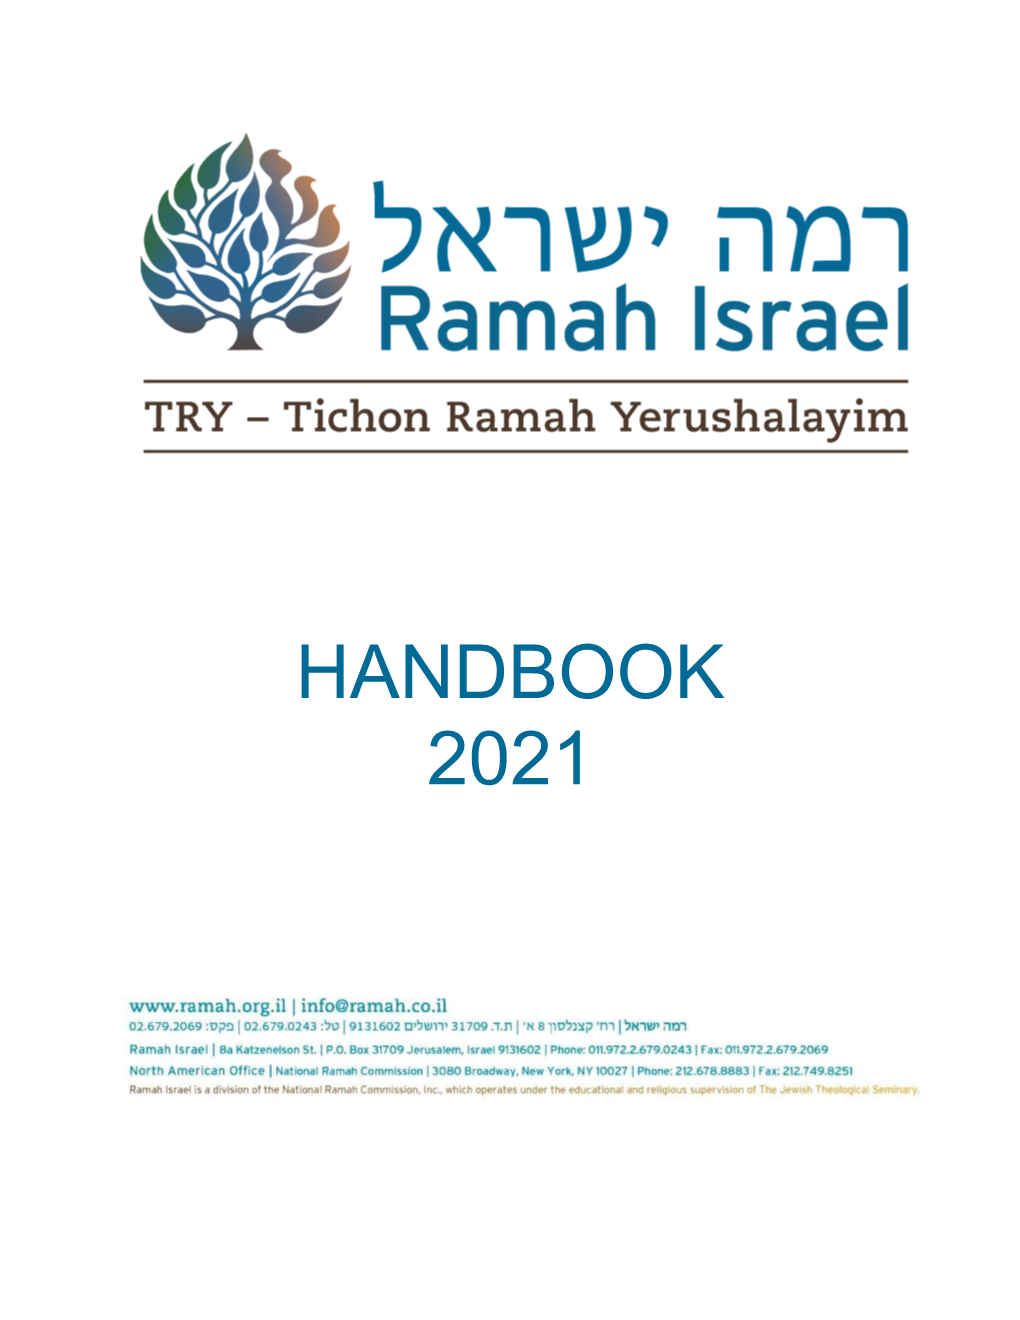 Handbook 2021